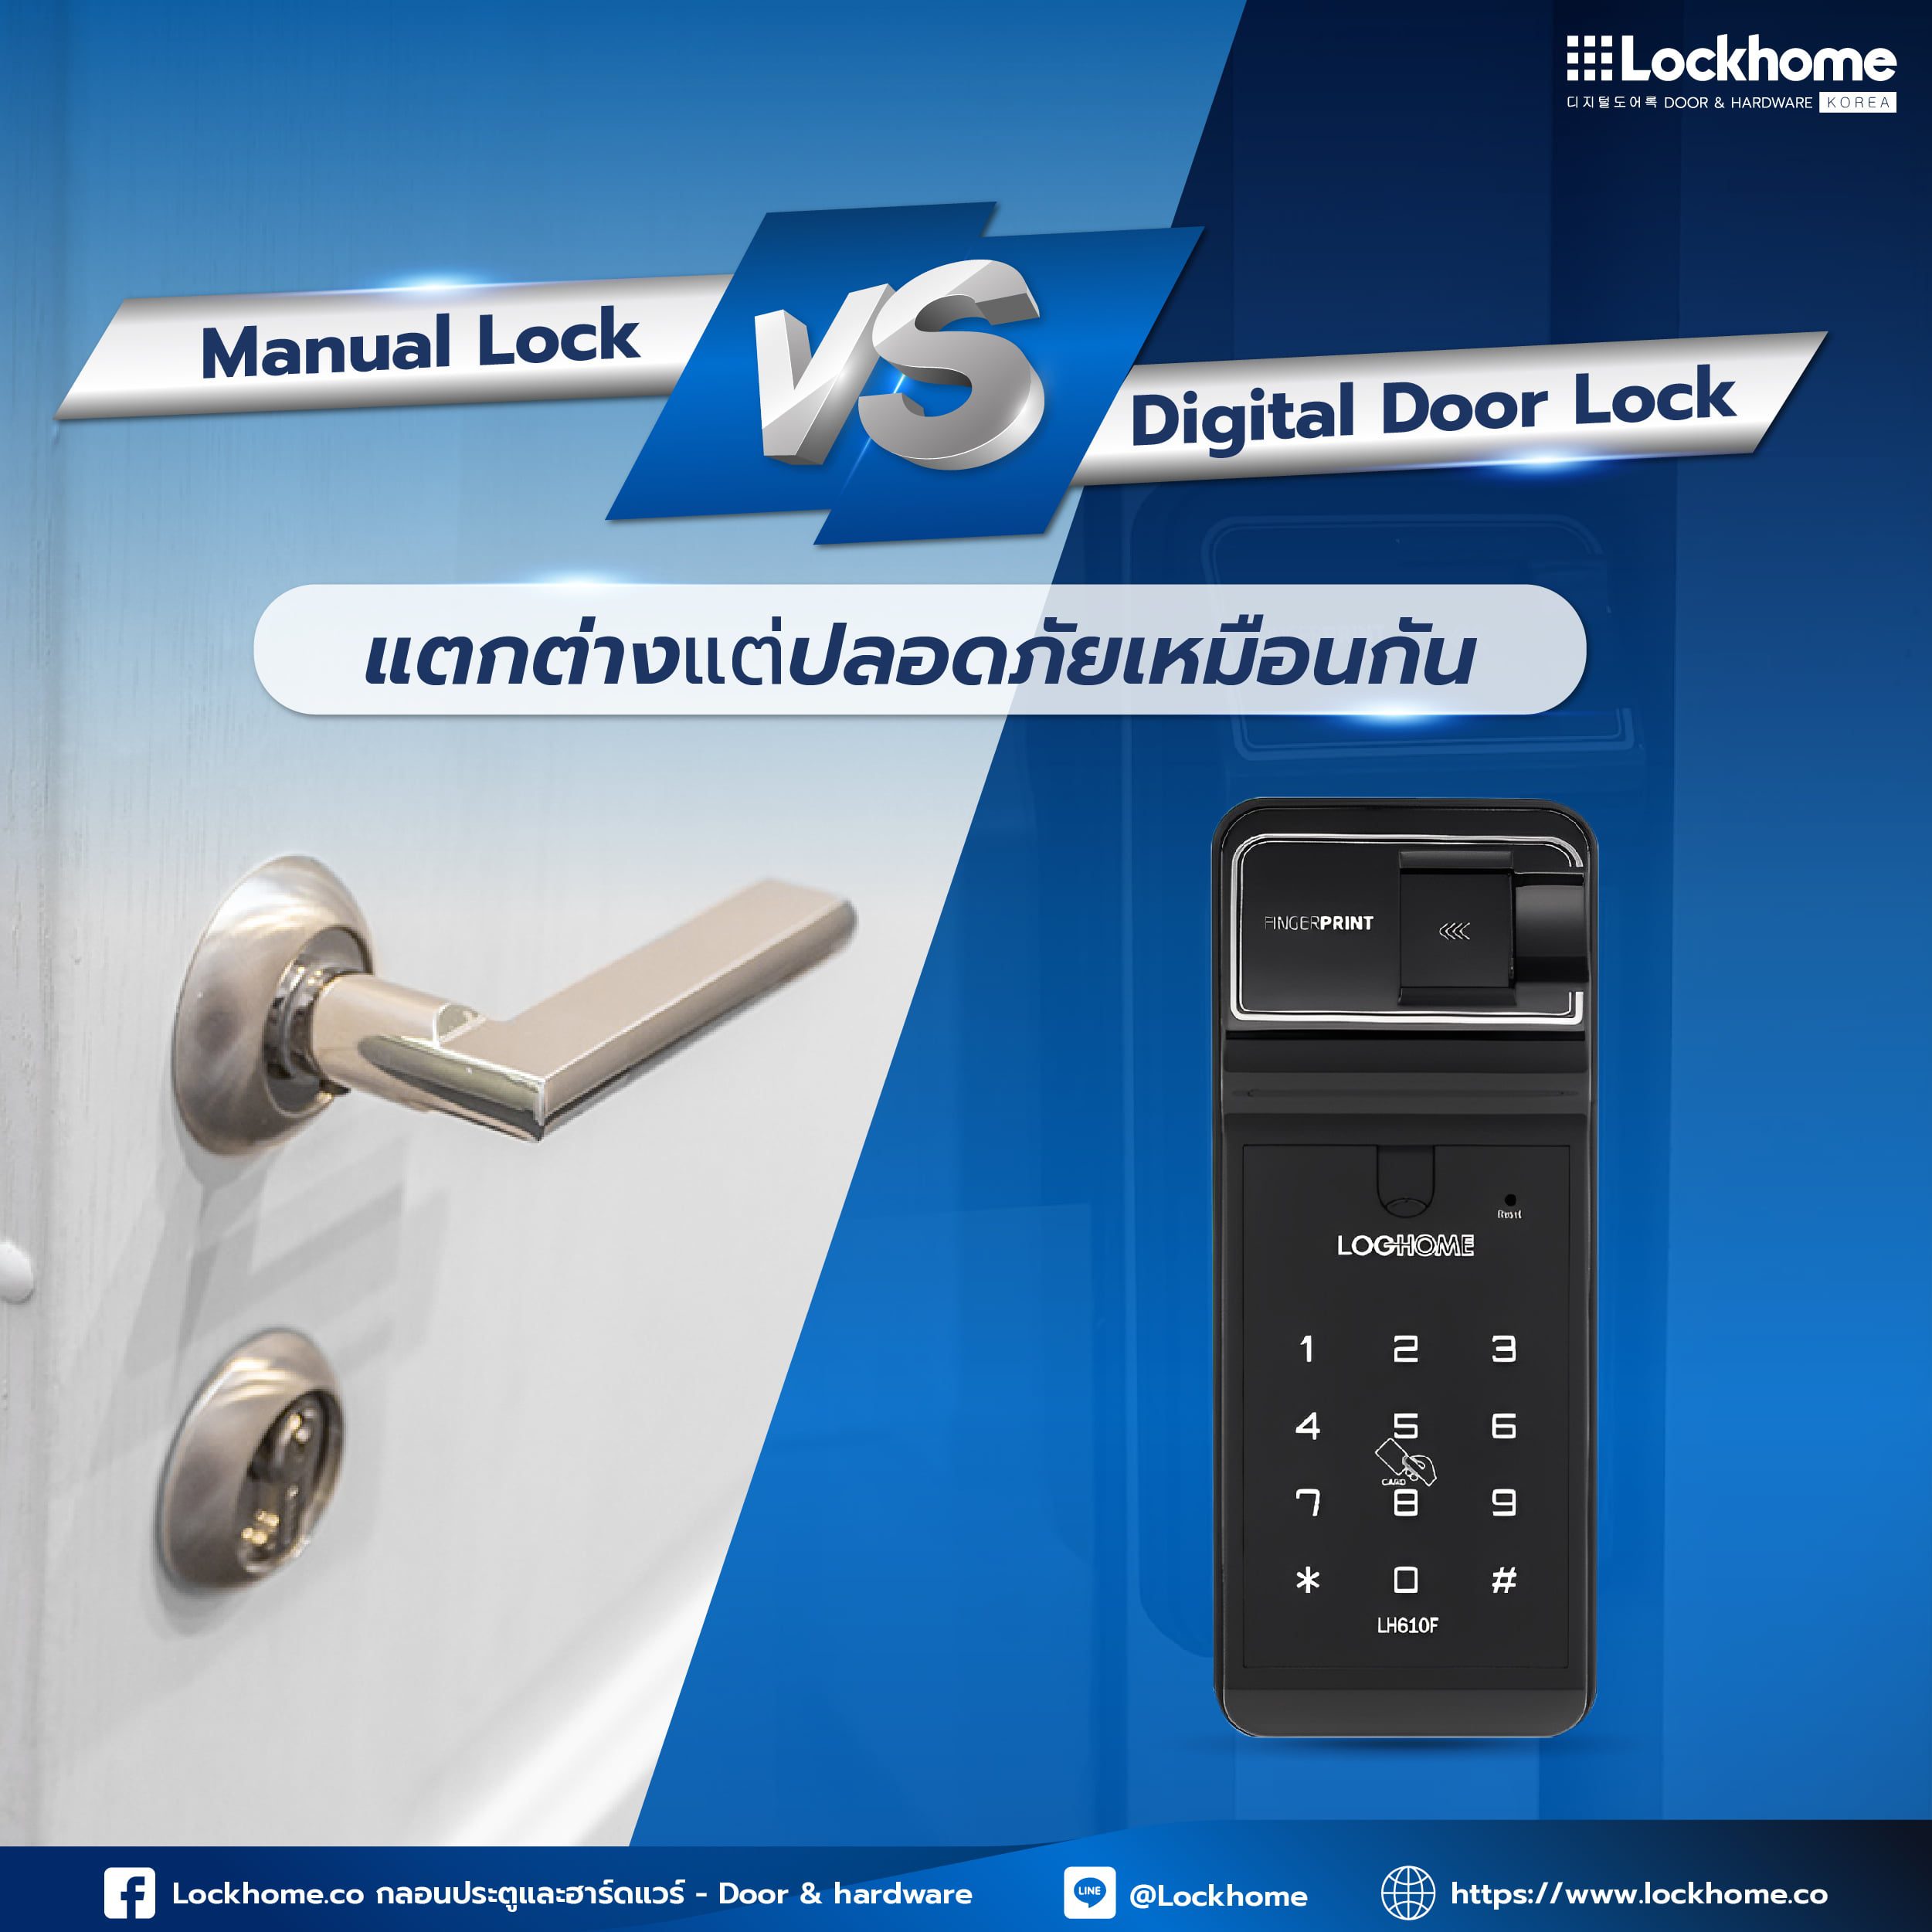 Manual Lock VS Digital Door Lock แตกต่างแต่ปลอดภัยเหมือนกัน